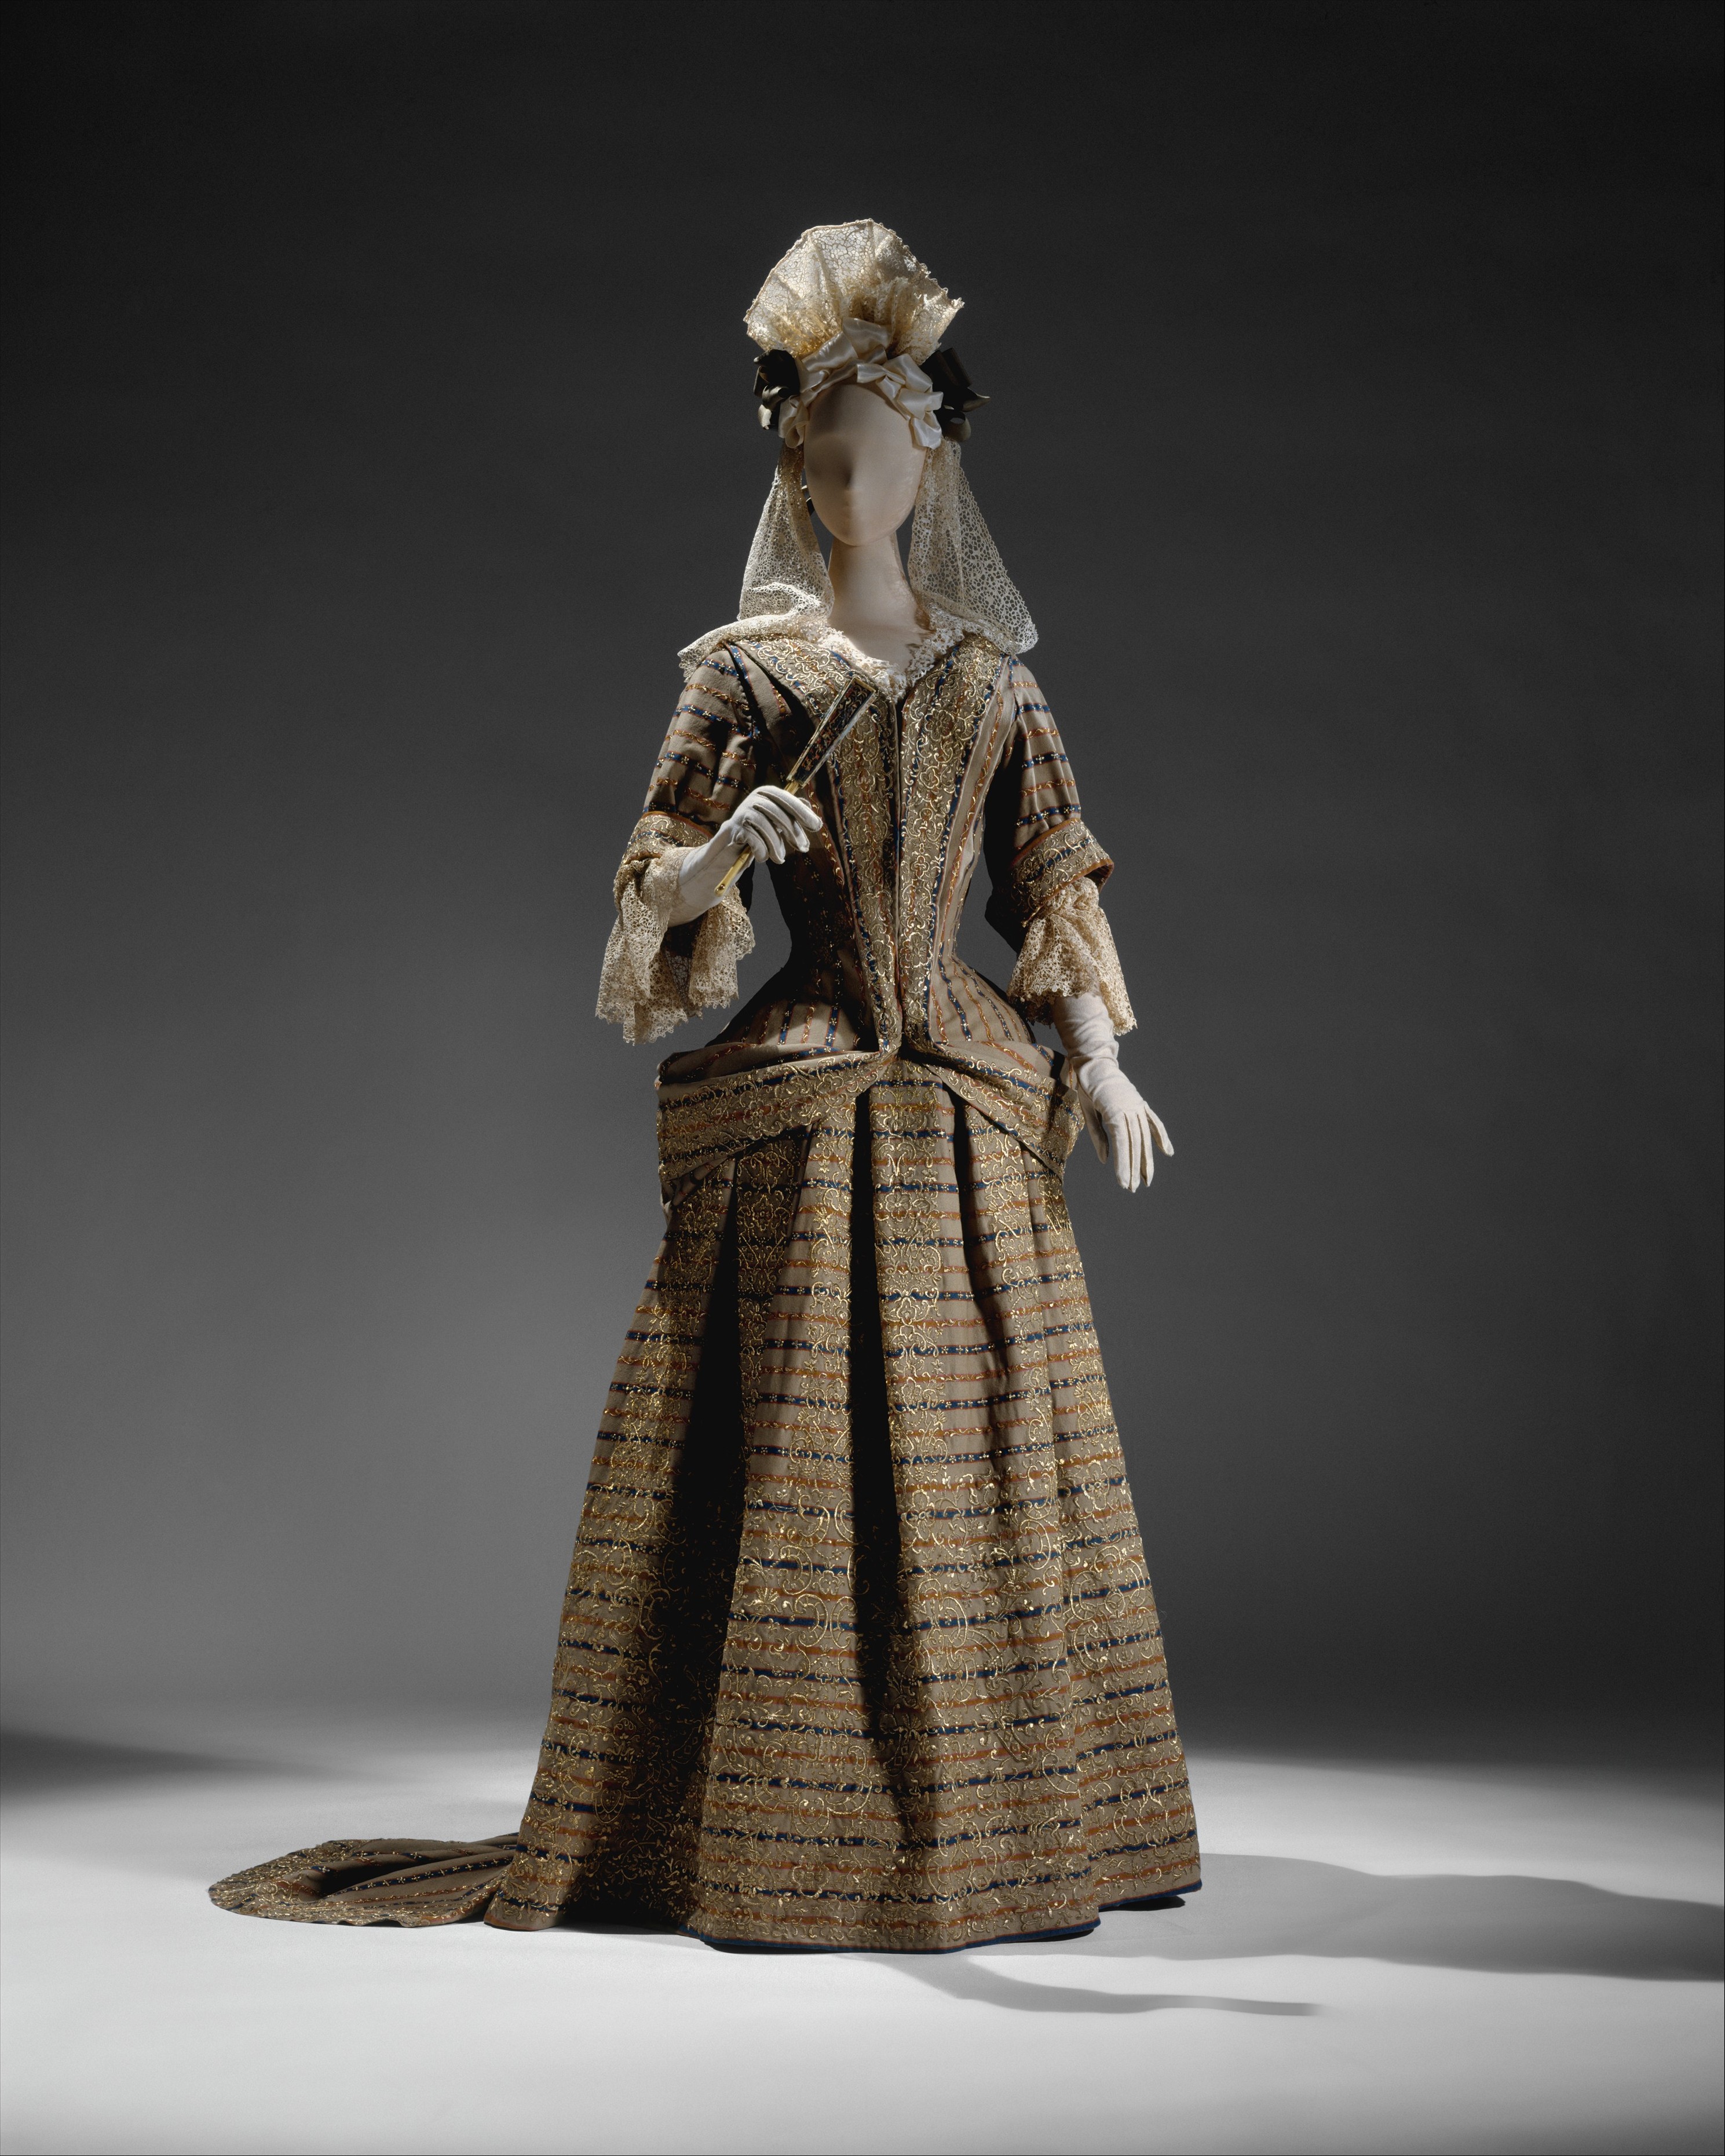 17th century dress costume